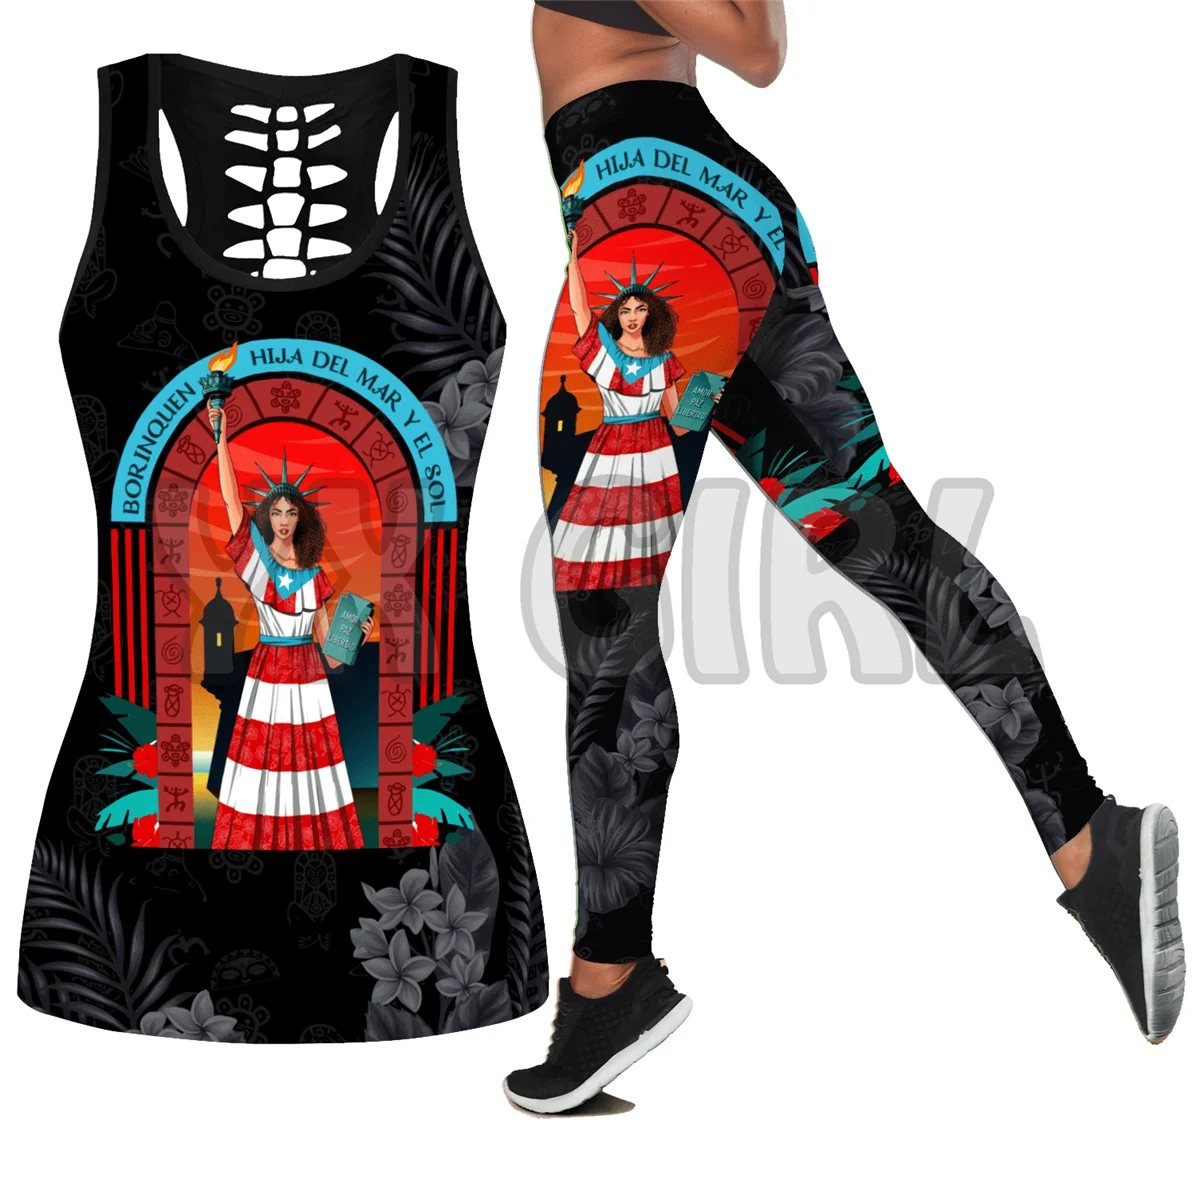 Puerto Rico  3D Printed Tank Top+Legging Combo Outfit Yoga Fitness Legging Women